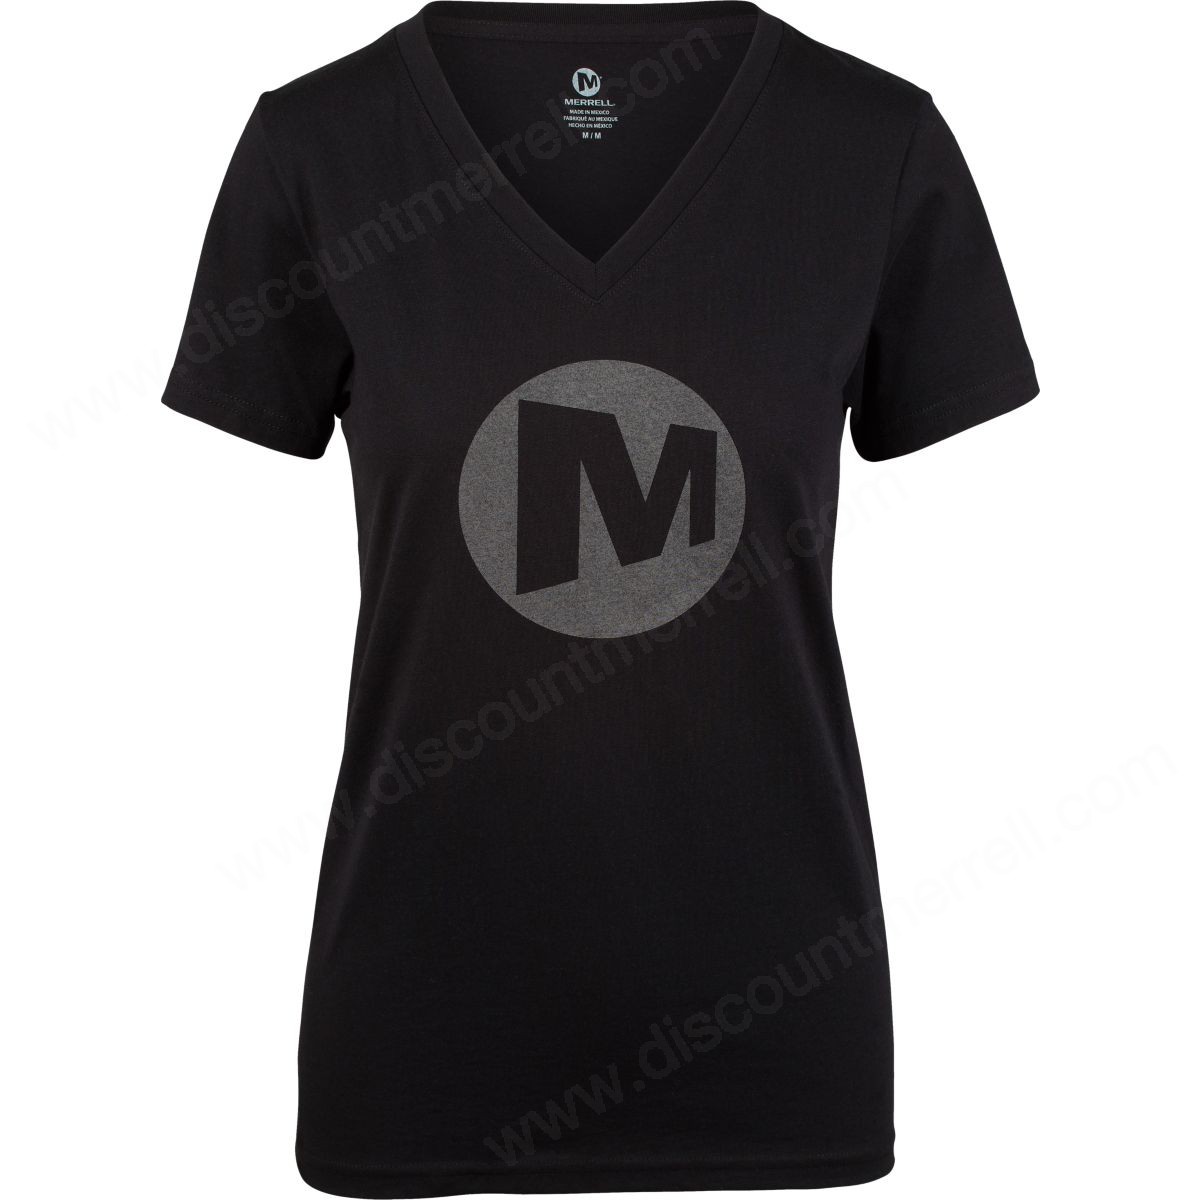 Merrell Woman's M Logo T-Shirts Black/reflective Grey/black - -0